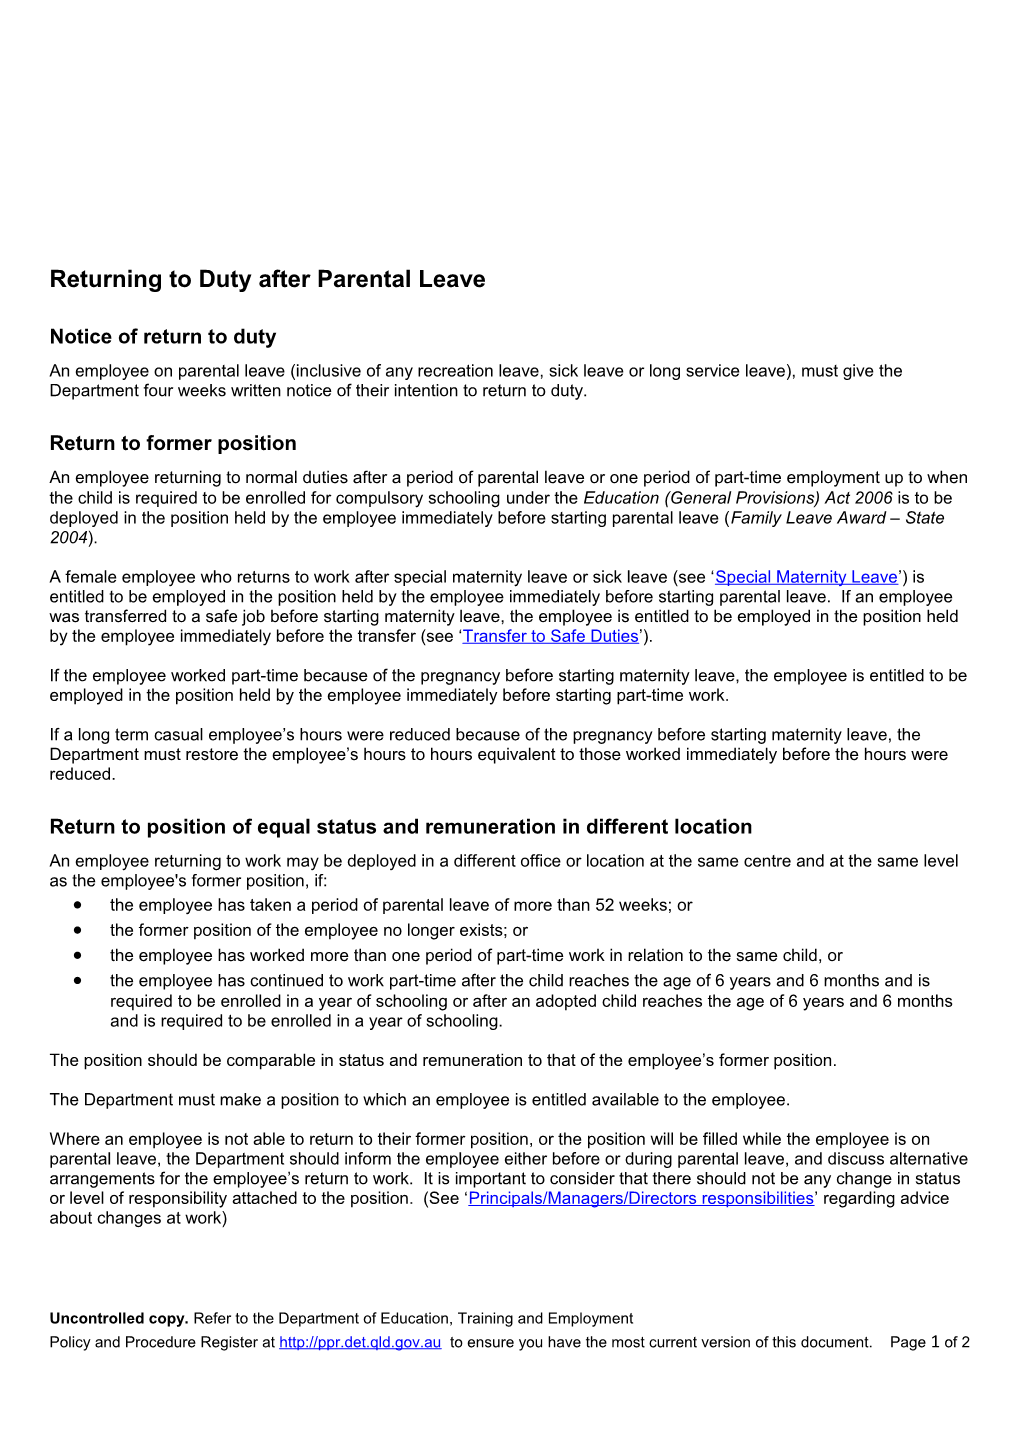 Returning to Duty After Parental Leave Information Sheet